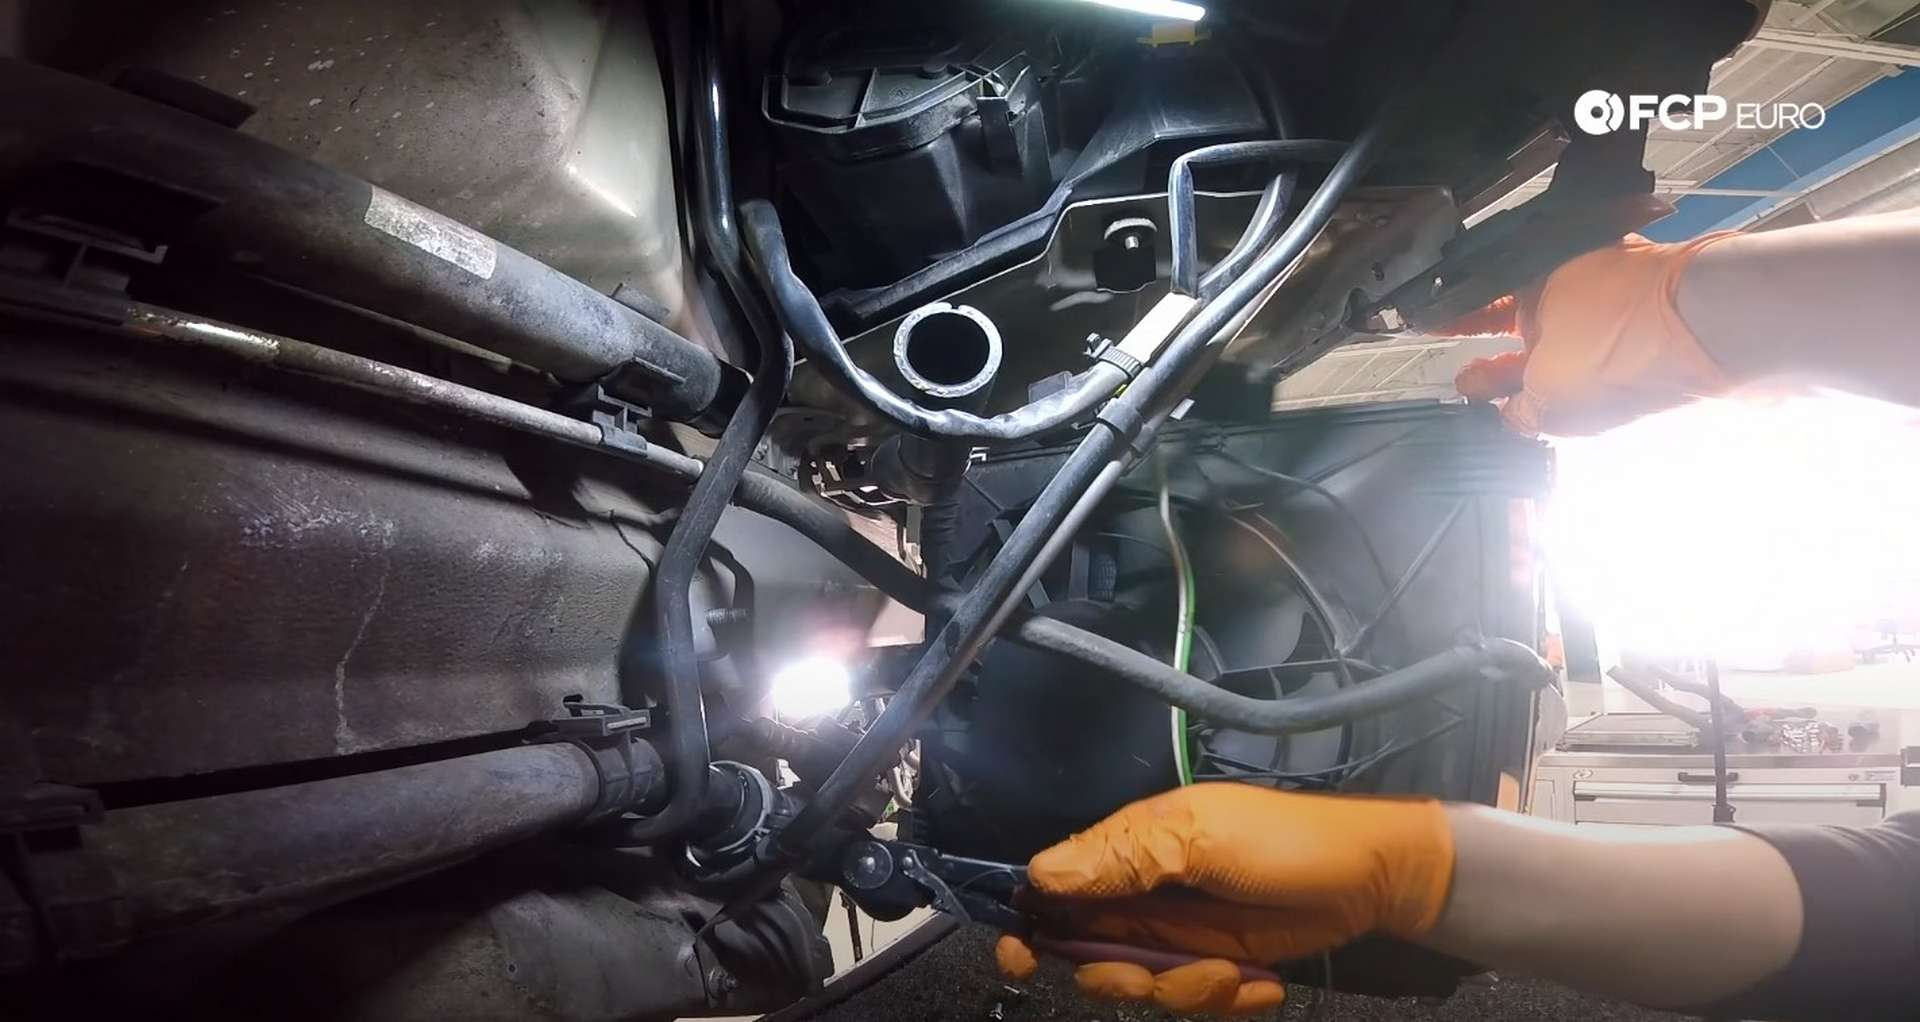 DIY Porsche 996 Radiator Replacement installing the new radiator